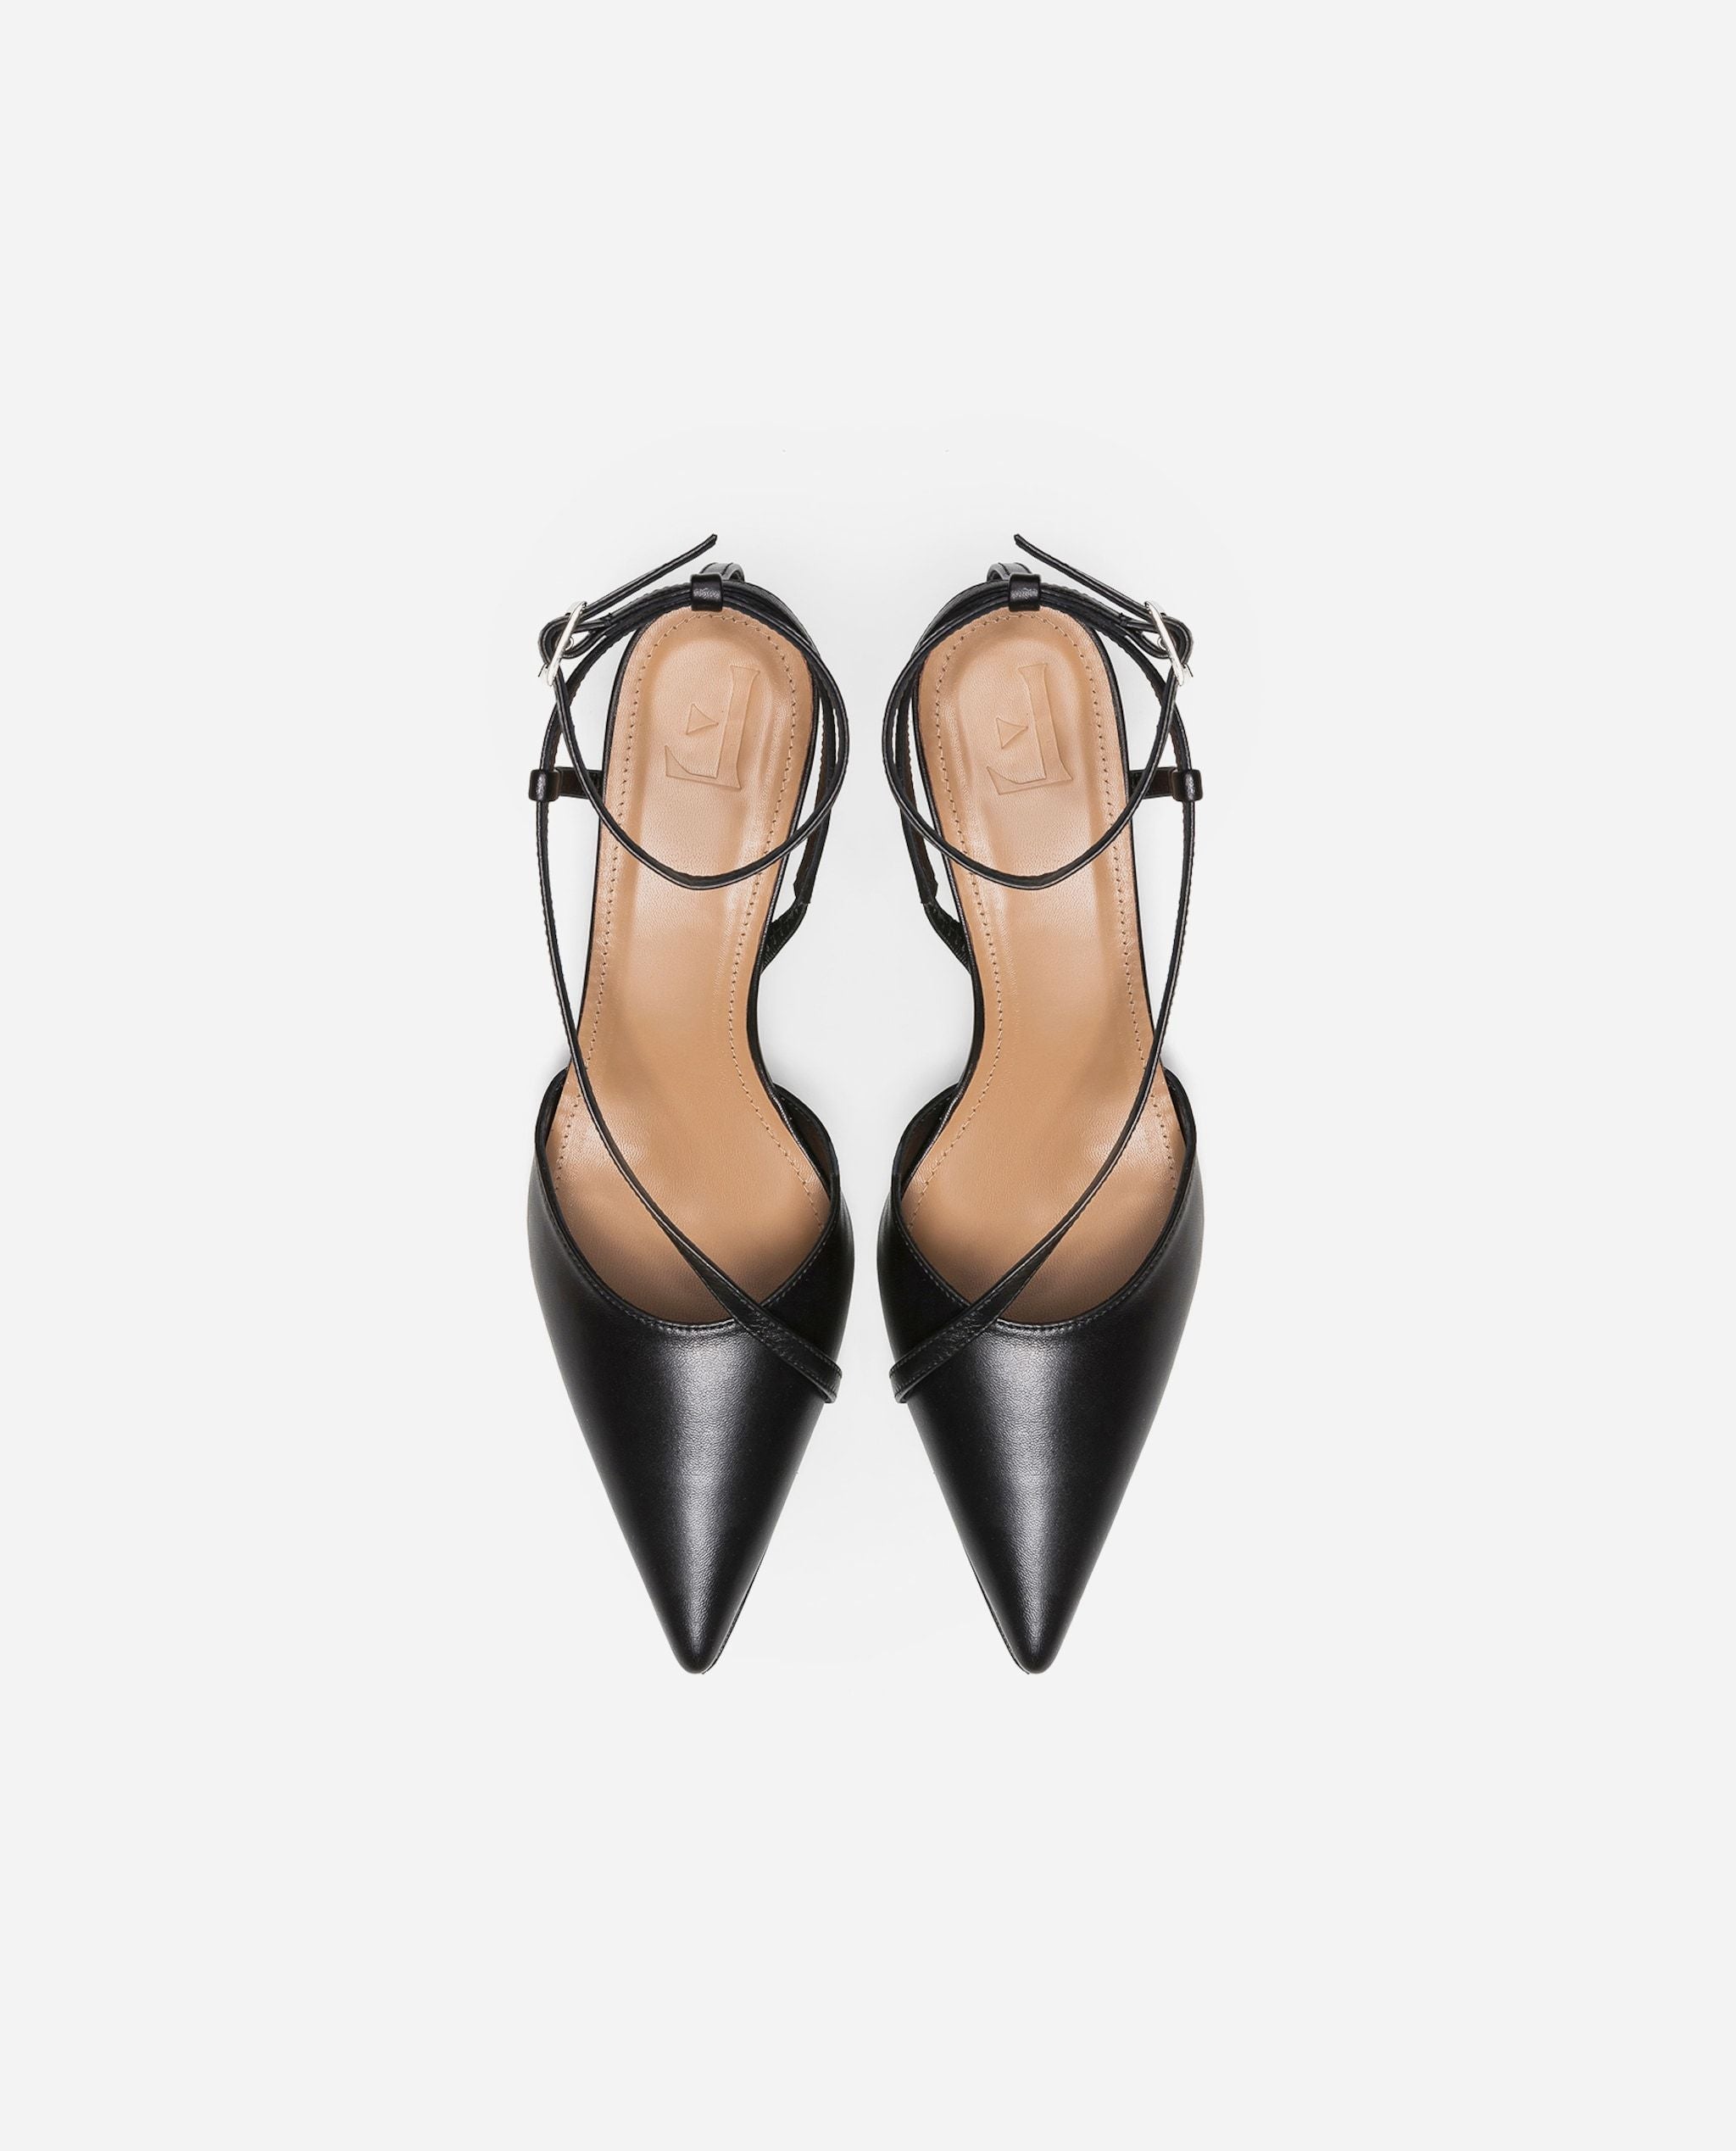 Fay Leather Black Heeled Shoes Heels 20010411601-001 - 4